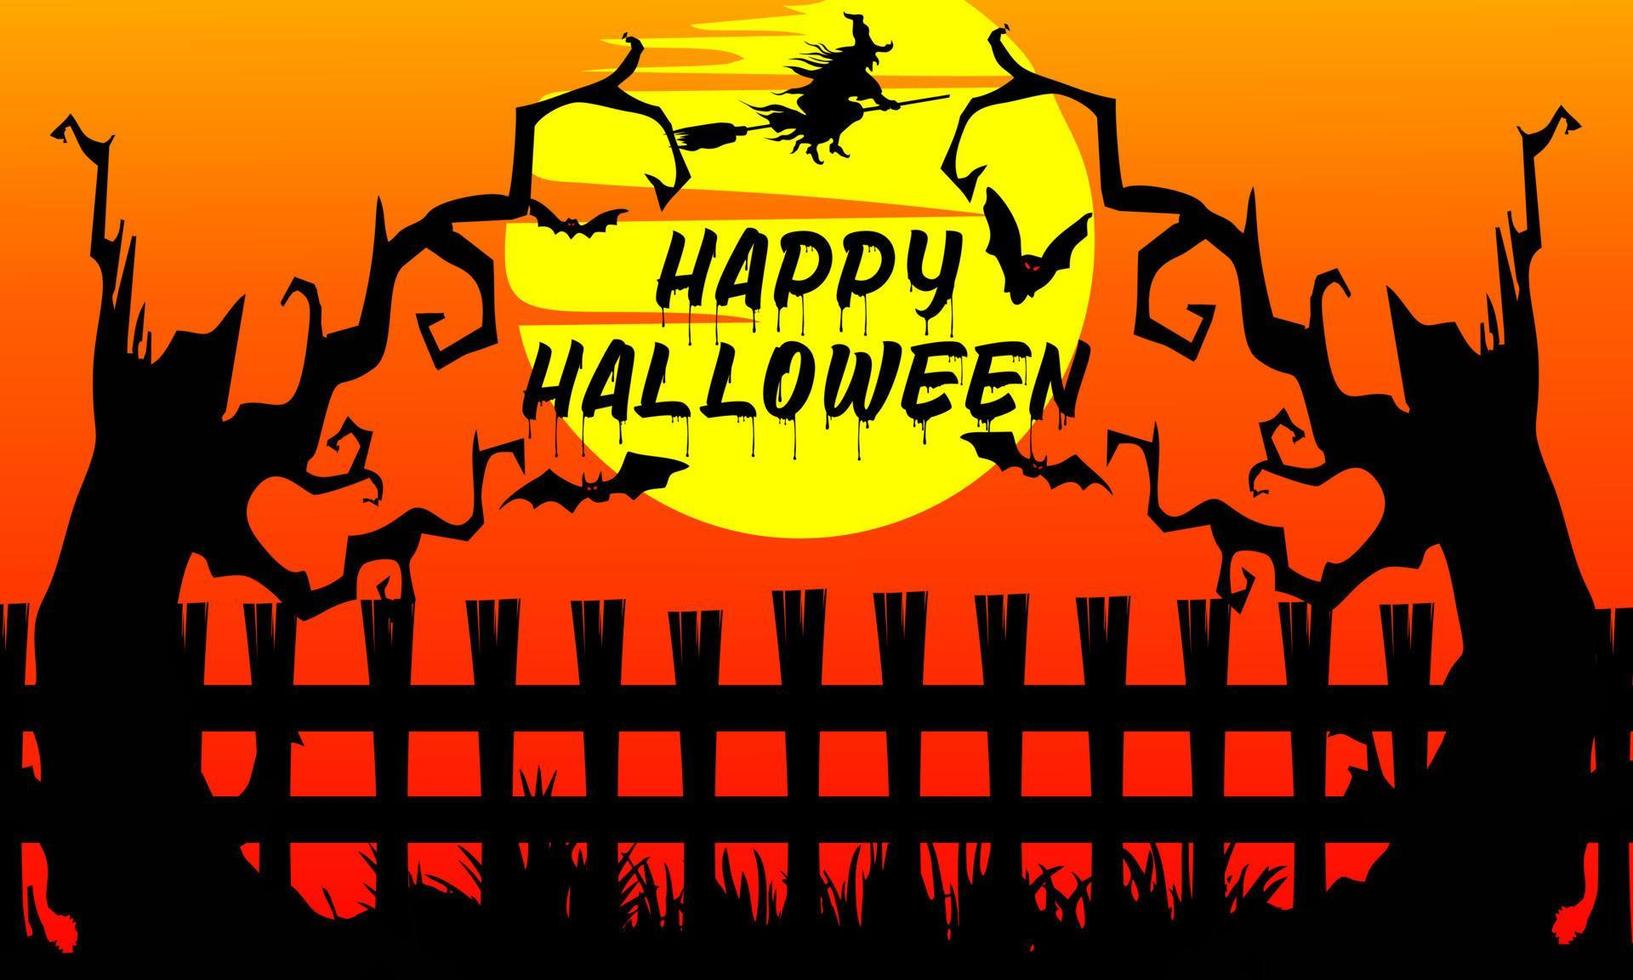 Happy halloween banner, Vector illustration